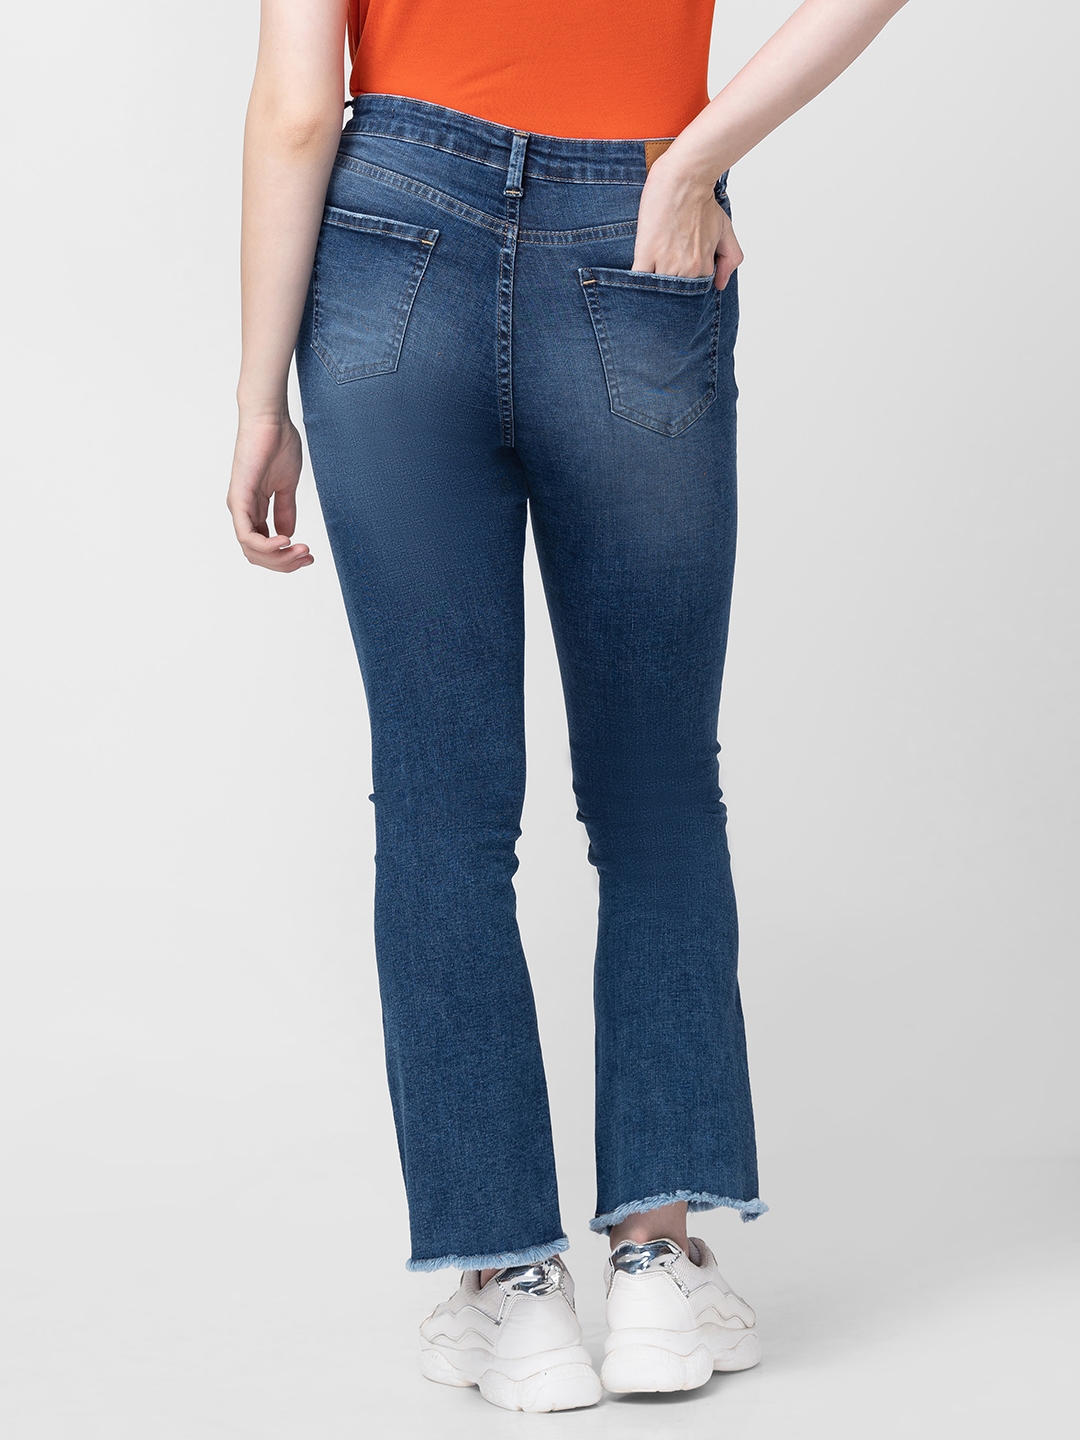 spykar | Women's Blue Cotton Solid Jeans 2